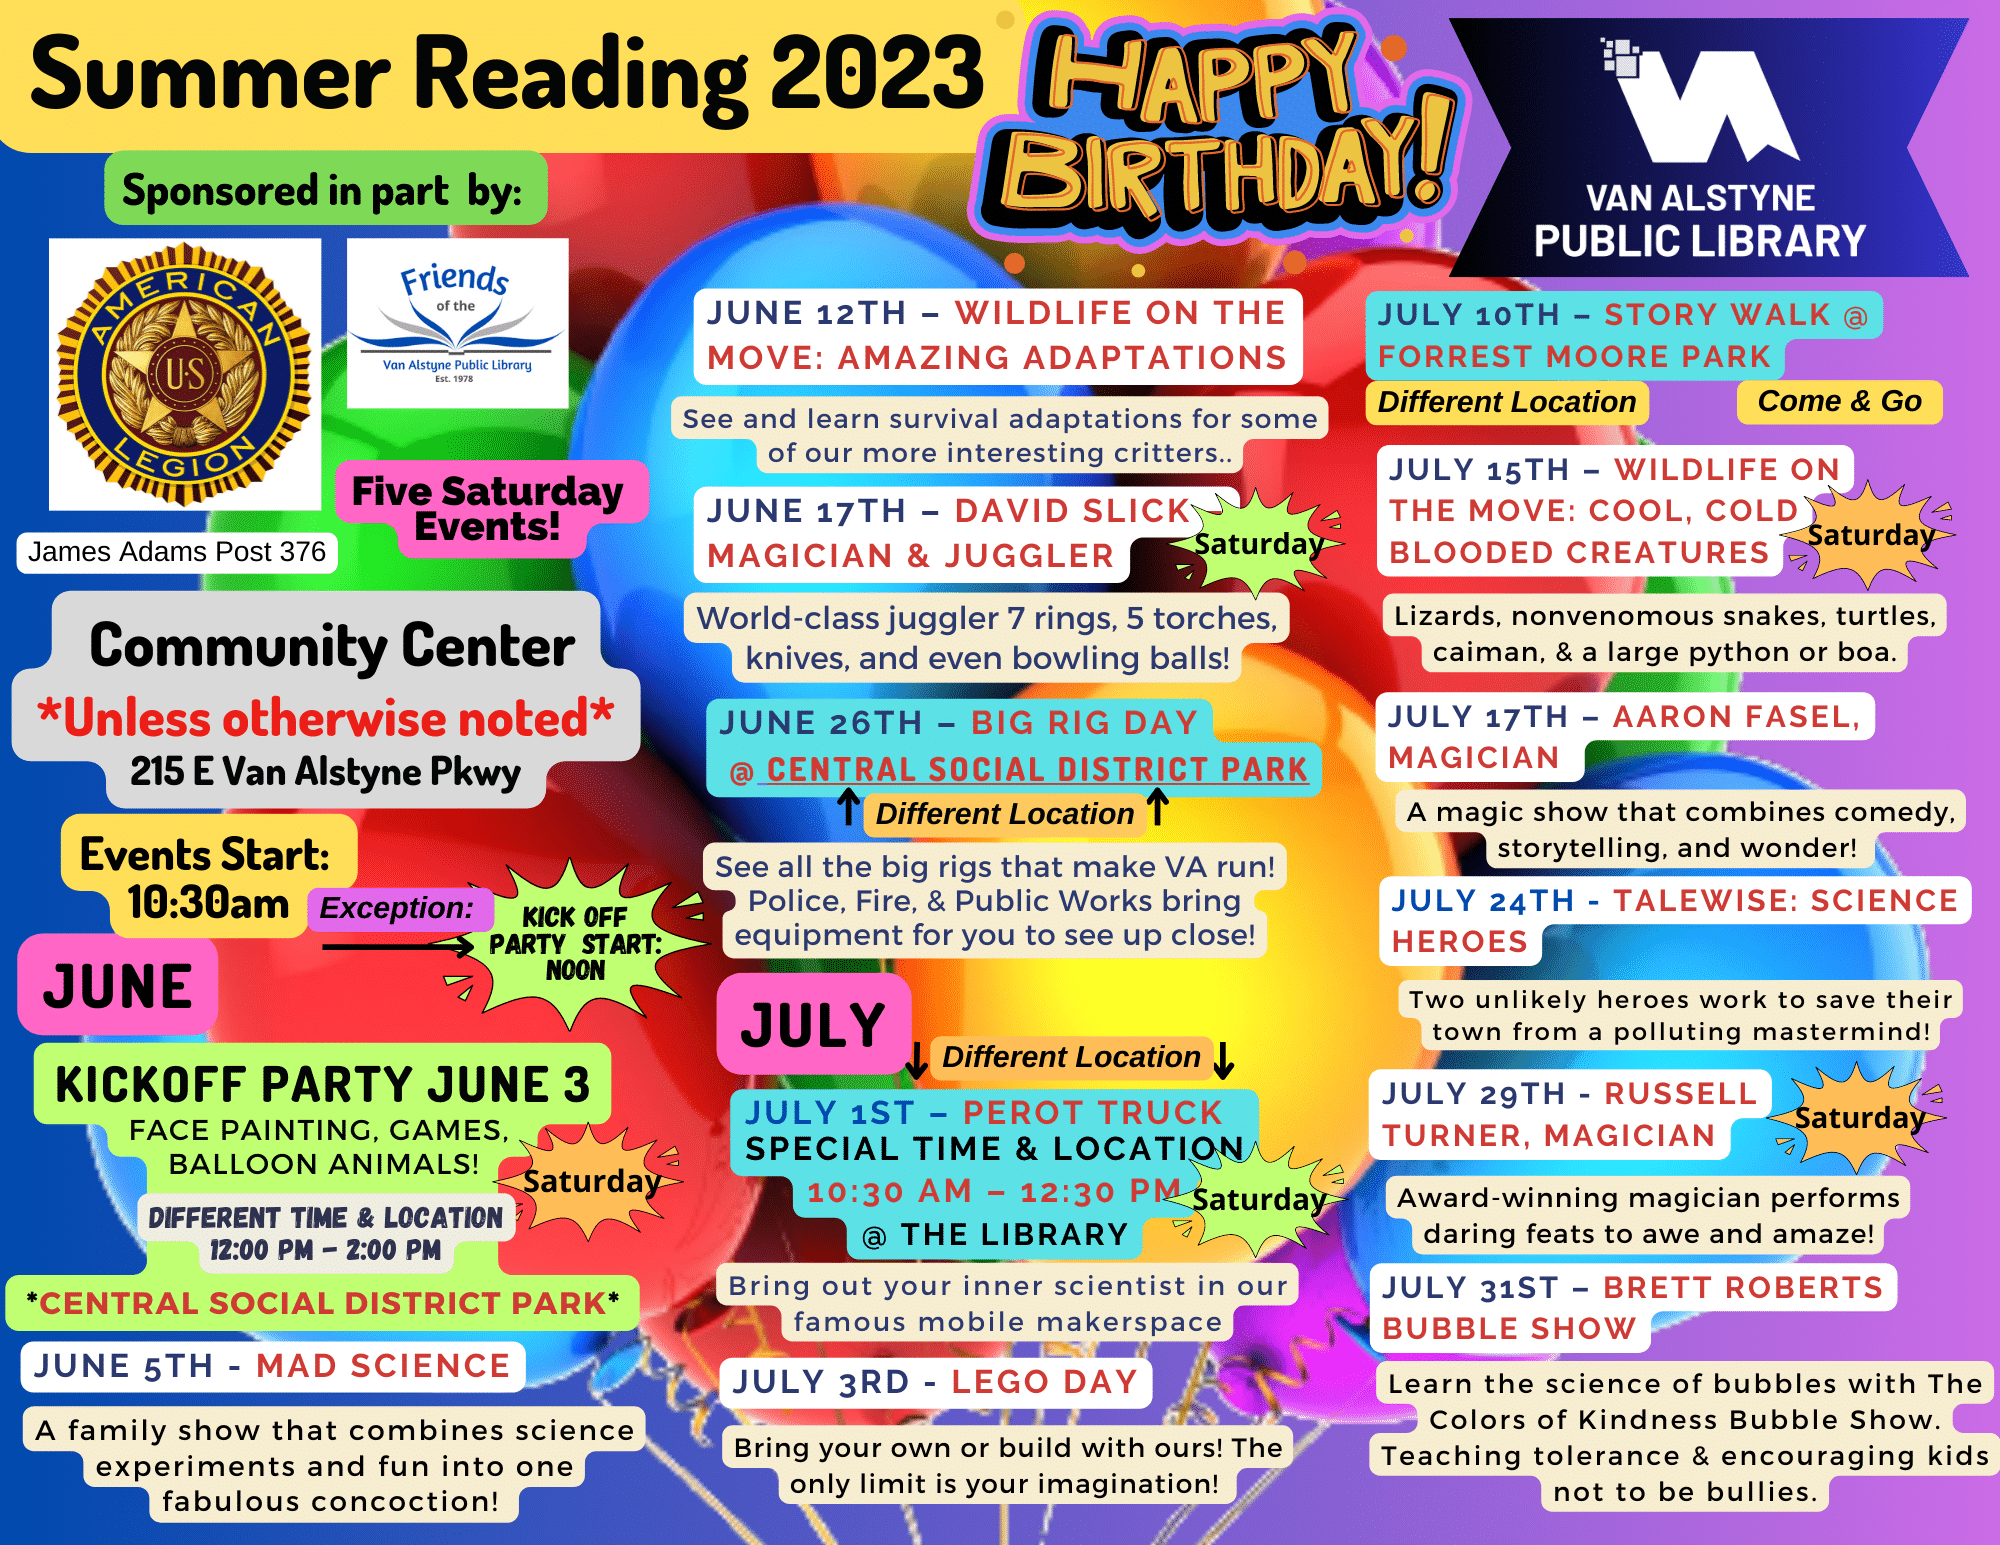 Call 903-482-5991 for a full rundown of our Summer Reading Program